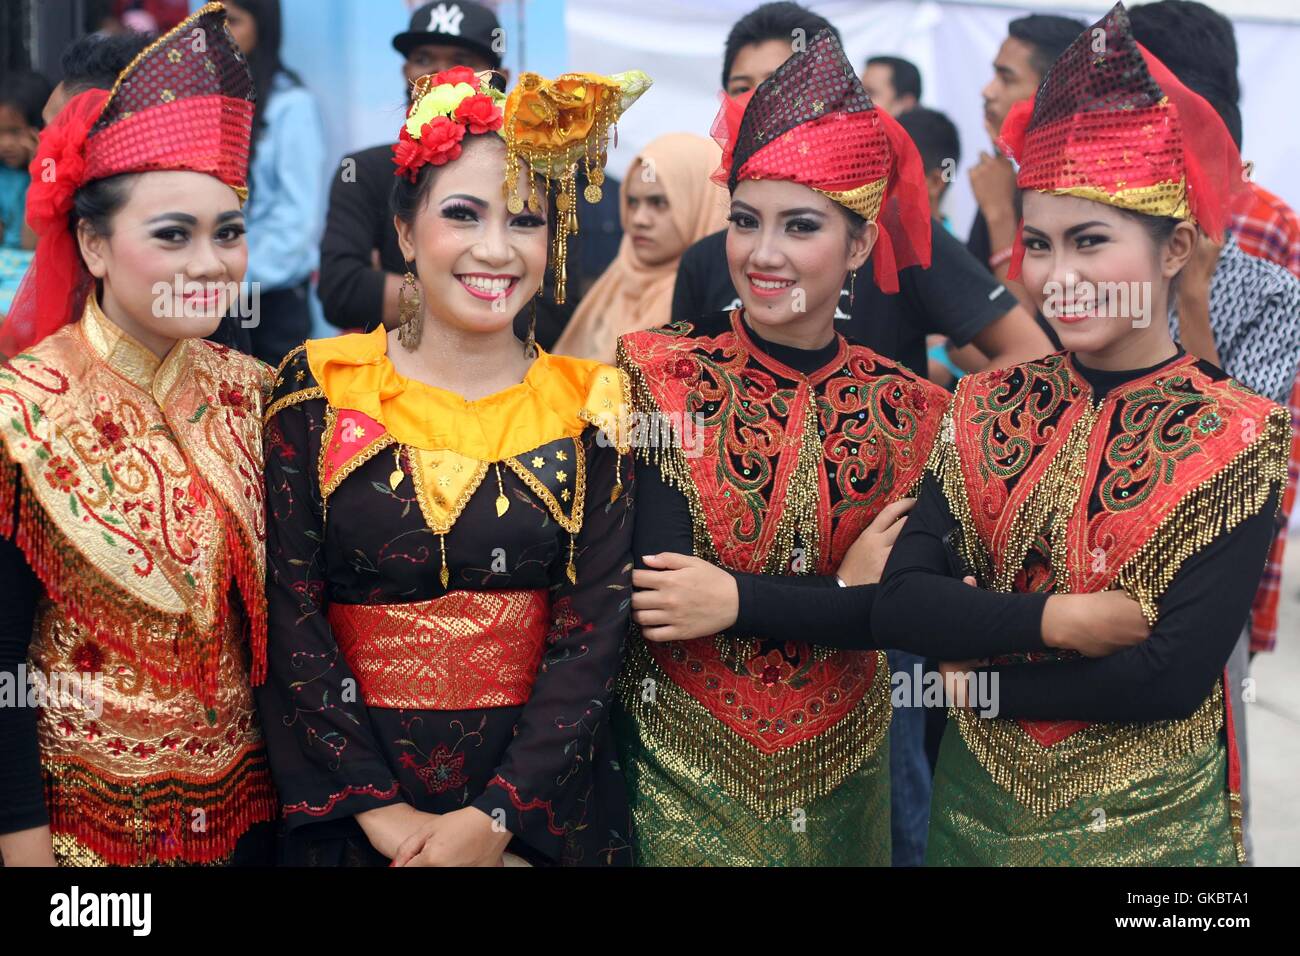 Girls used Minang traditional fashion in Pariaman, West Sumatra, Indonesia. Photo by Yuli Seperi/Alamy Stock Photo